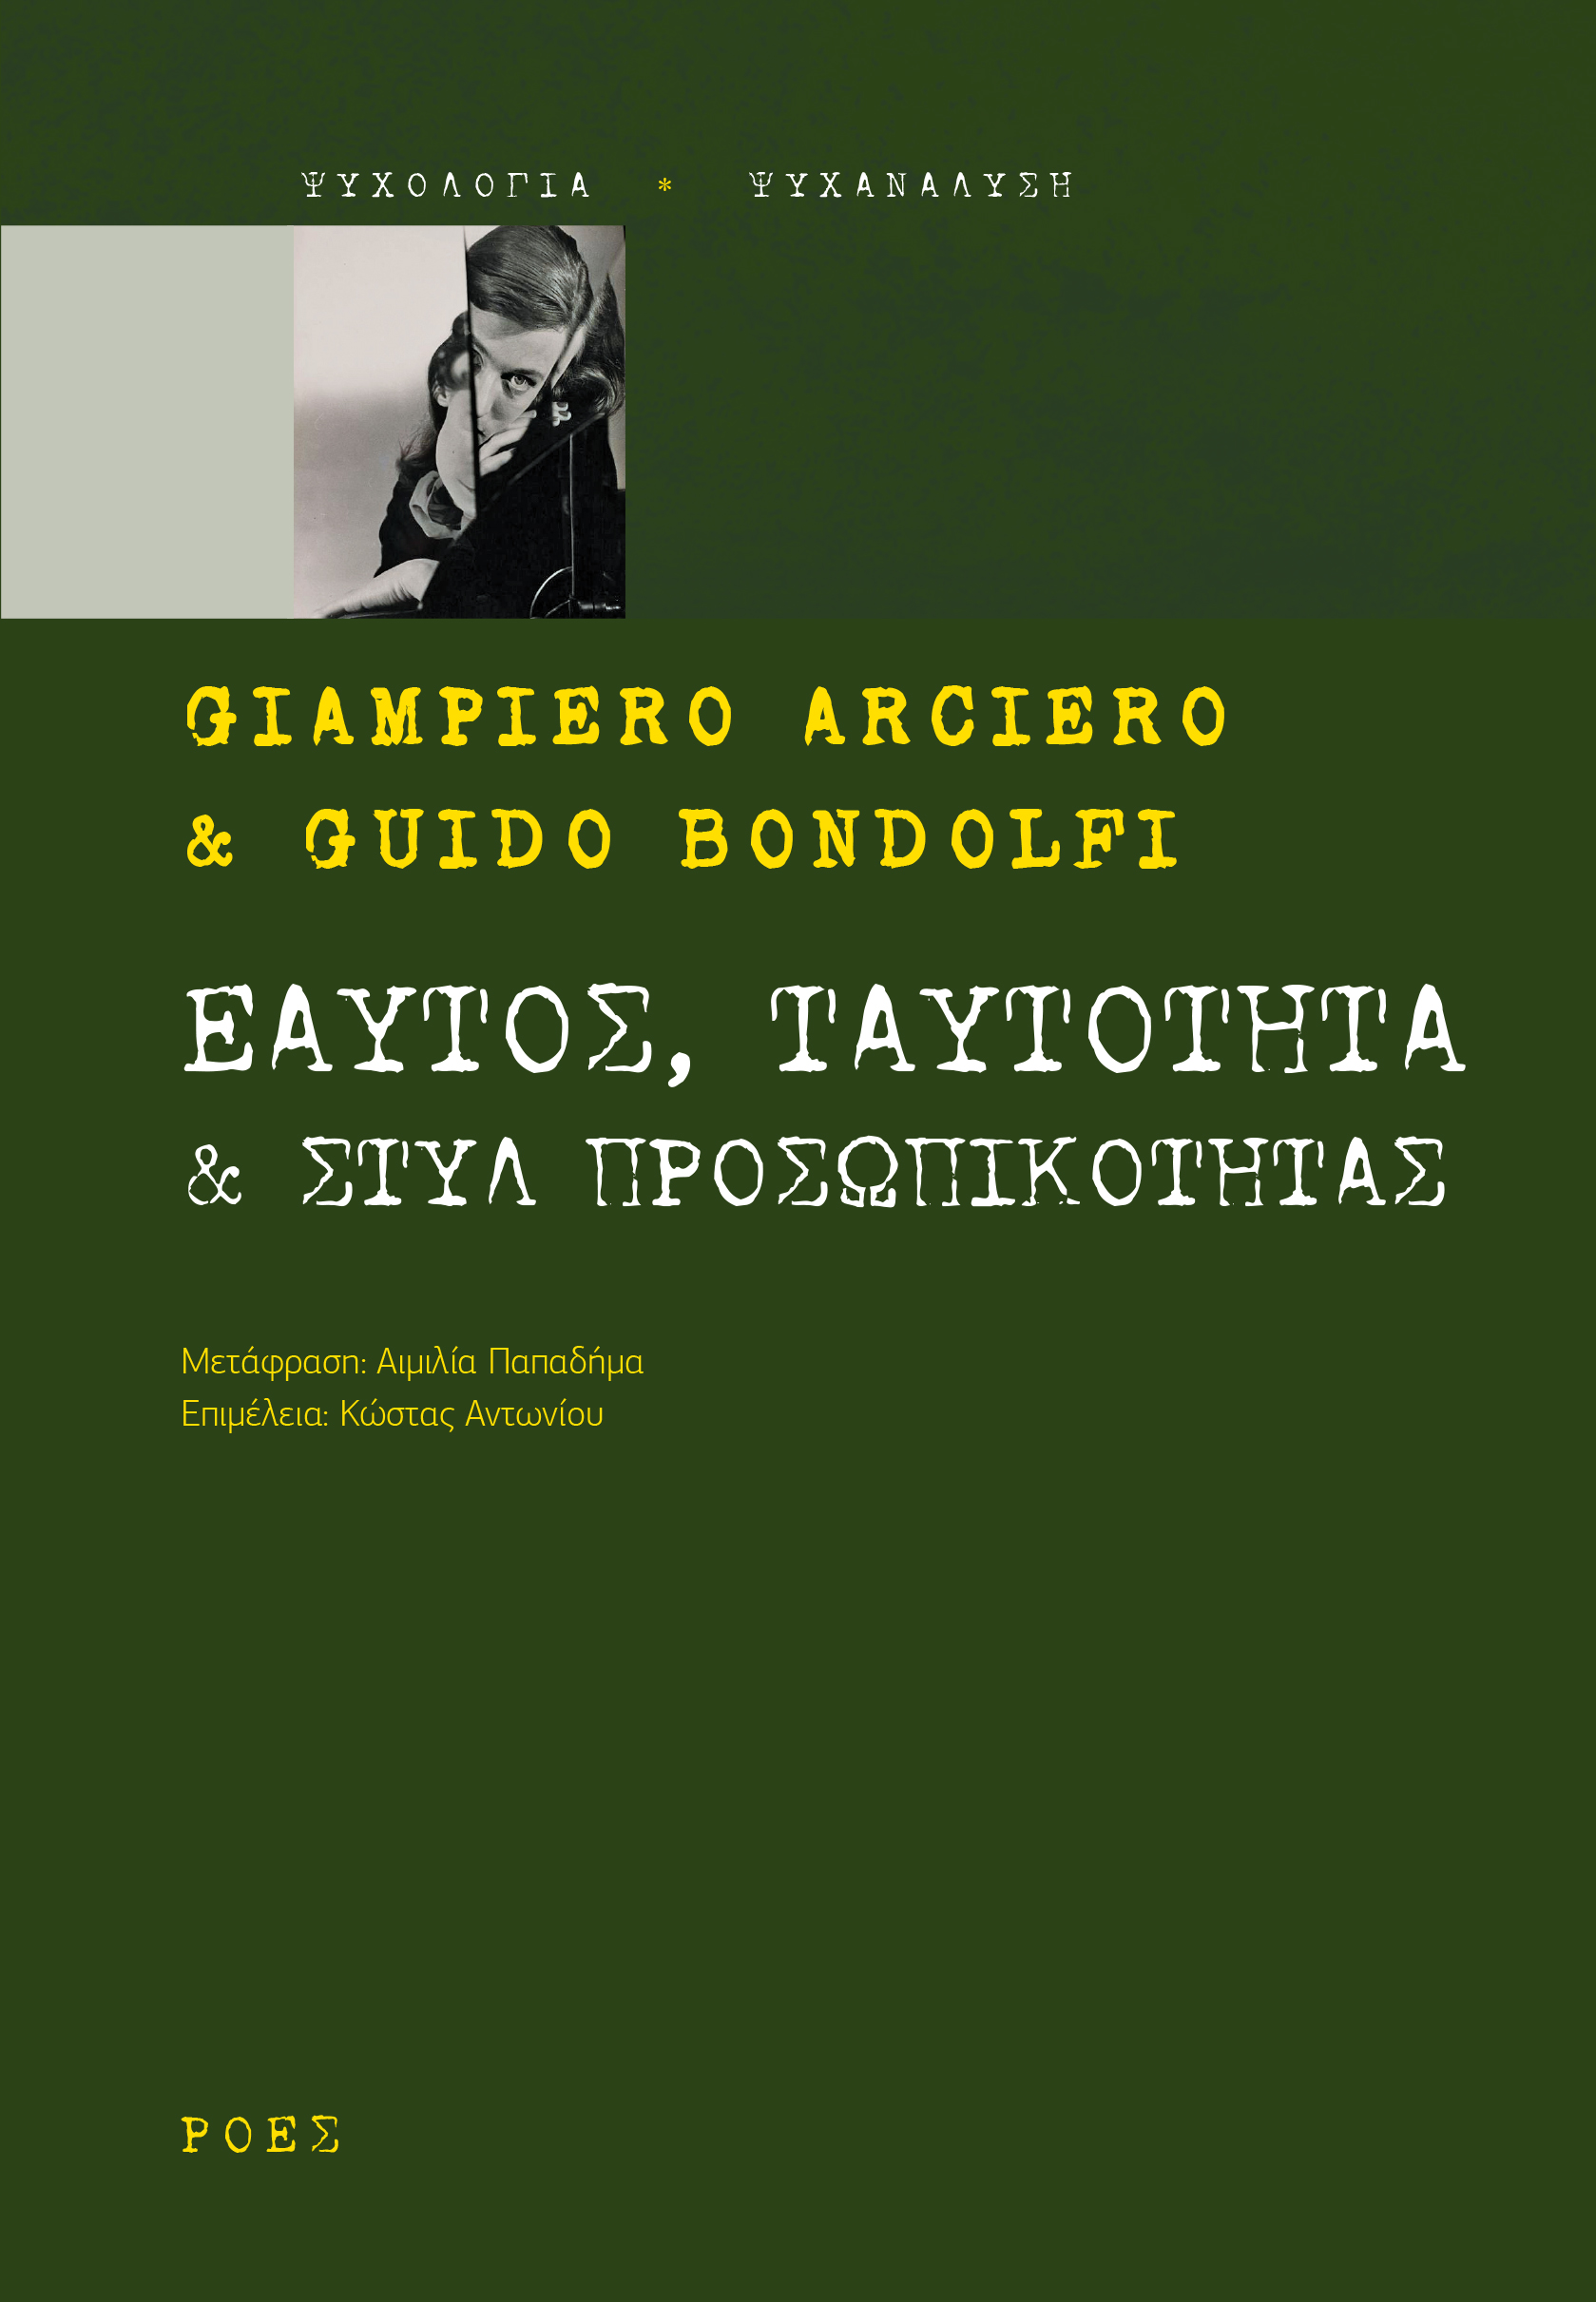 You are currently viewing Giampiero Arciero & Guido Bondolfi: Εαυτός, ταυτότητα & στυλ προσωπικότητας – Μετάφραση: Αιμιλία Παπαδήμα, Επιμέλεια: Κώστας Αντωνίου, Εκδόσεις Ροές